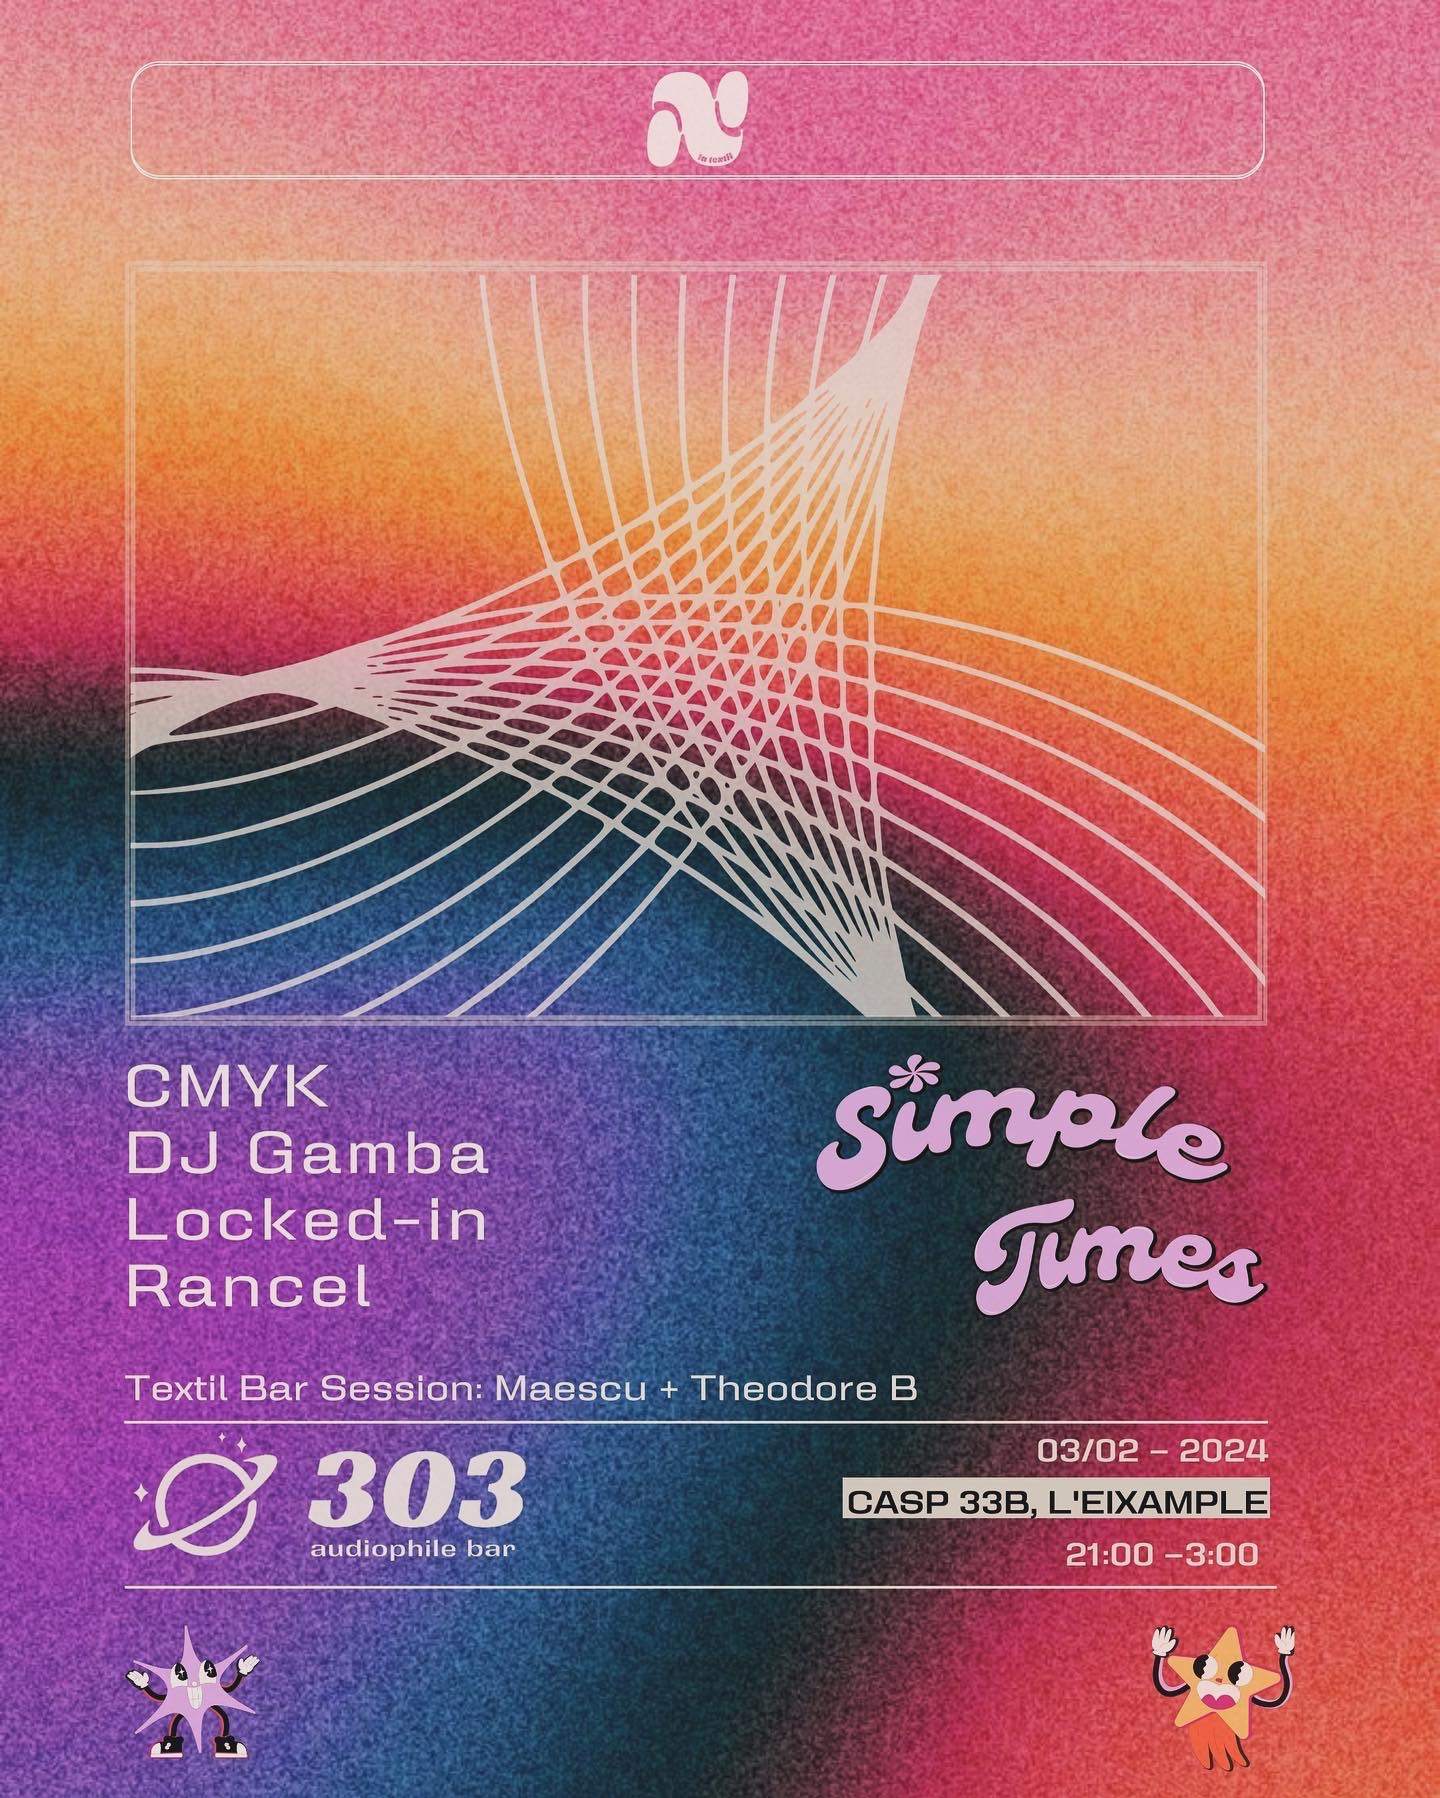 Simple Times at 303 Audiophile / CMYK, Rancel, DJ Gamba, Locked-In - フライヤー表